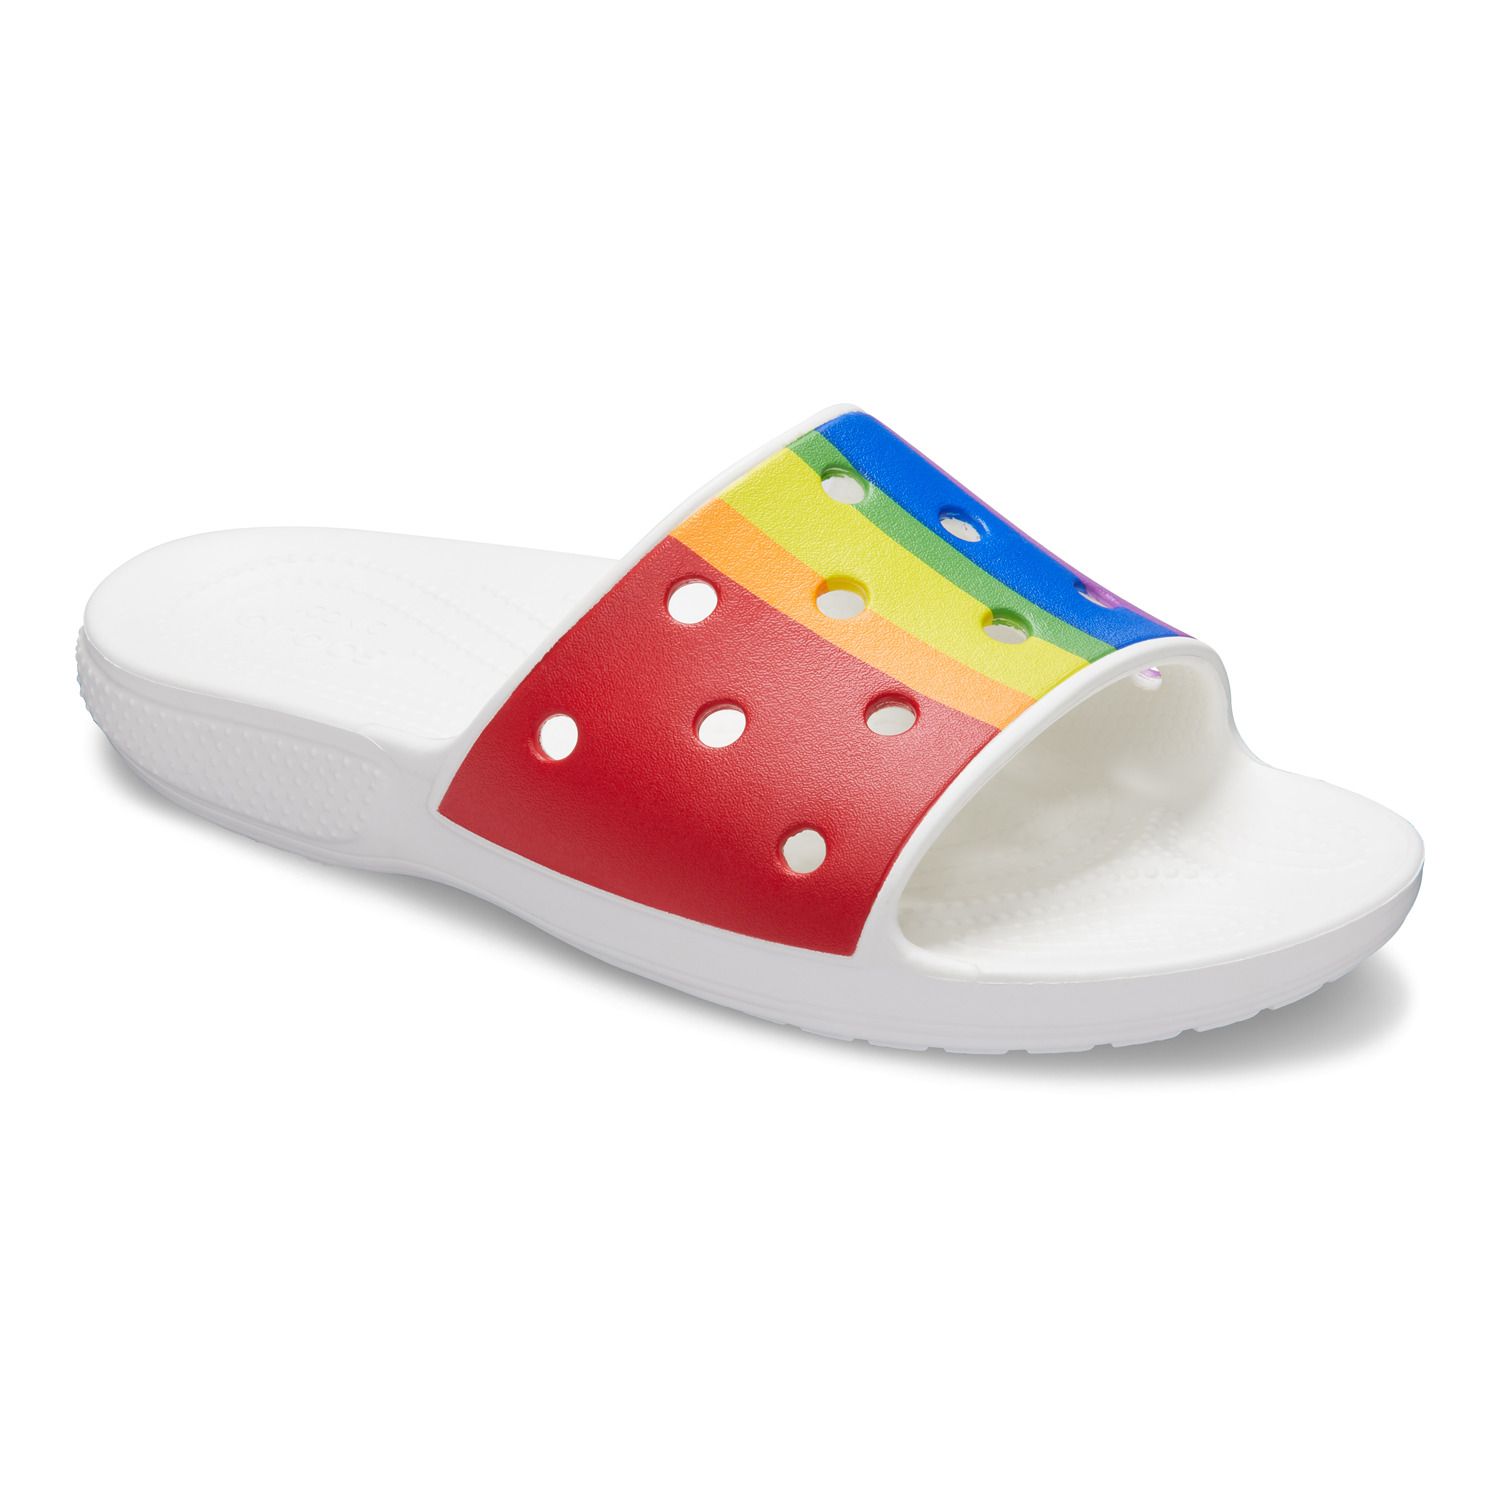 crocs rainbow sandals